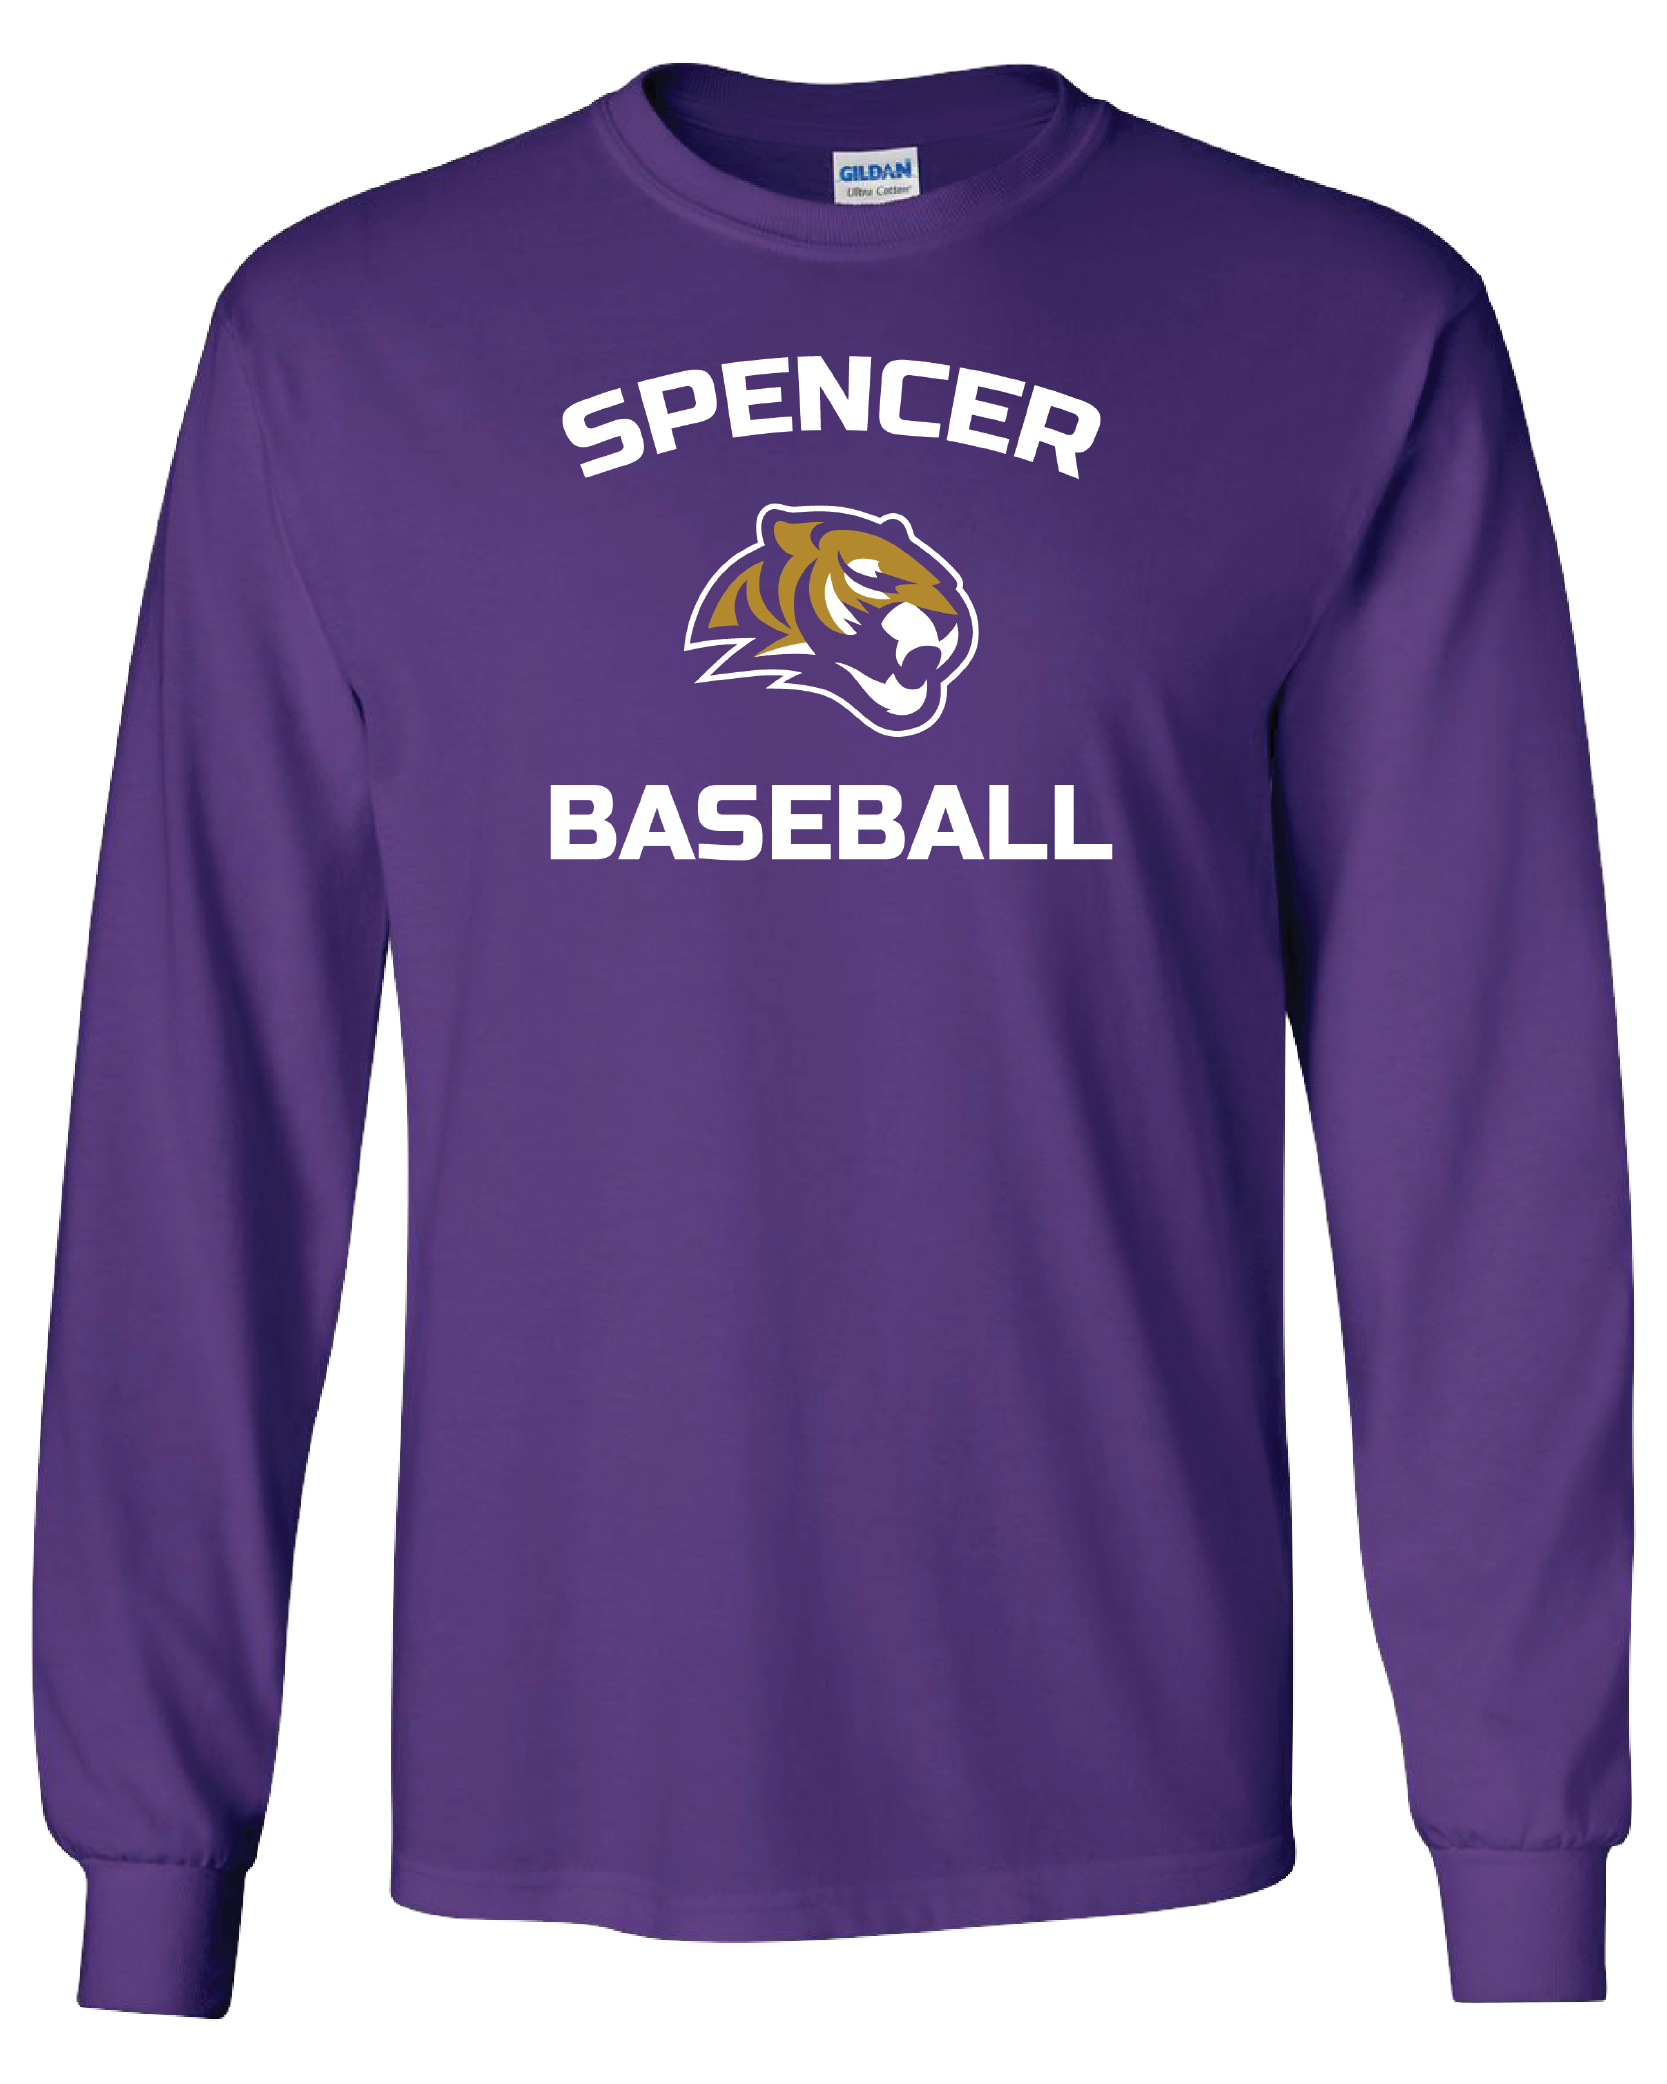 Adult Long Sleeve Cotton Shirt | Spencer Baseball